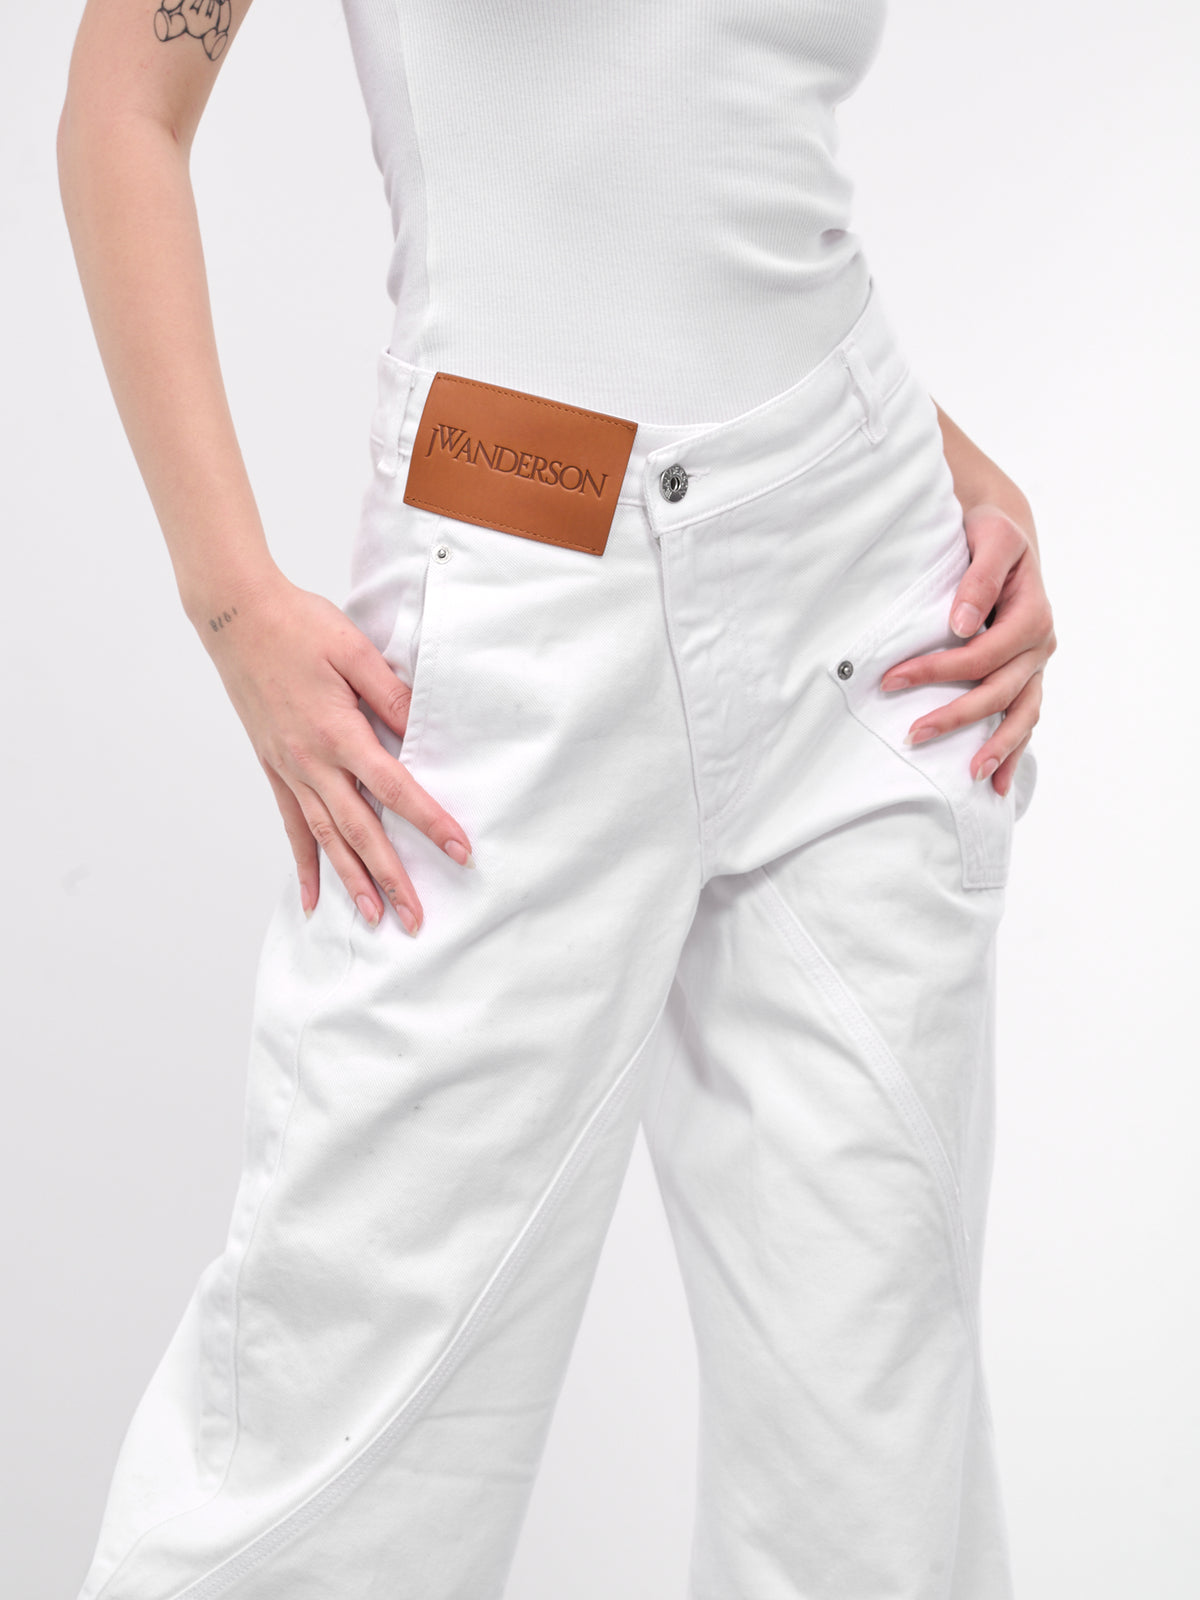 Crystal Hem Twisted Jeans (DT0092-PG0880-WHITE)